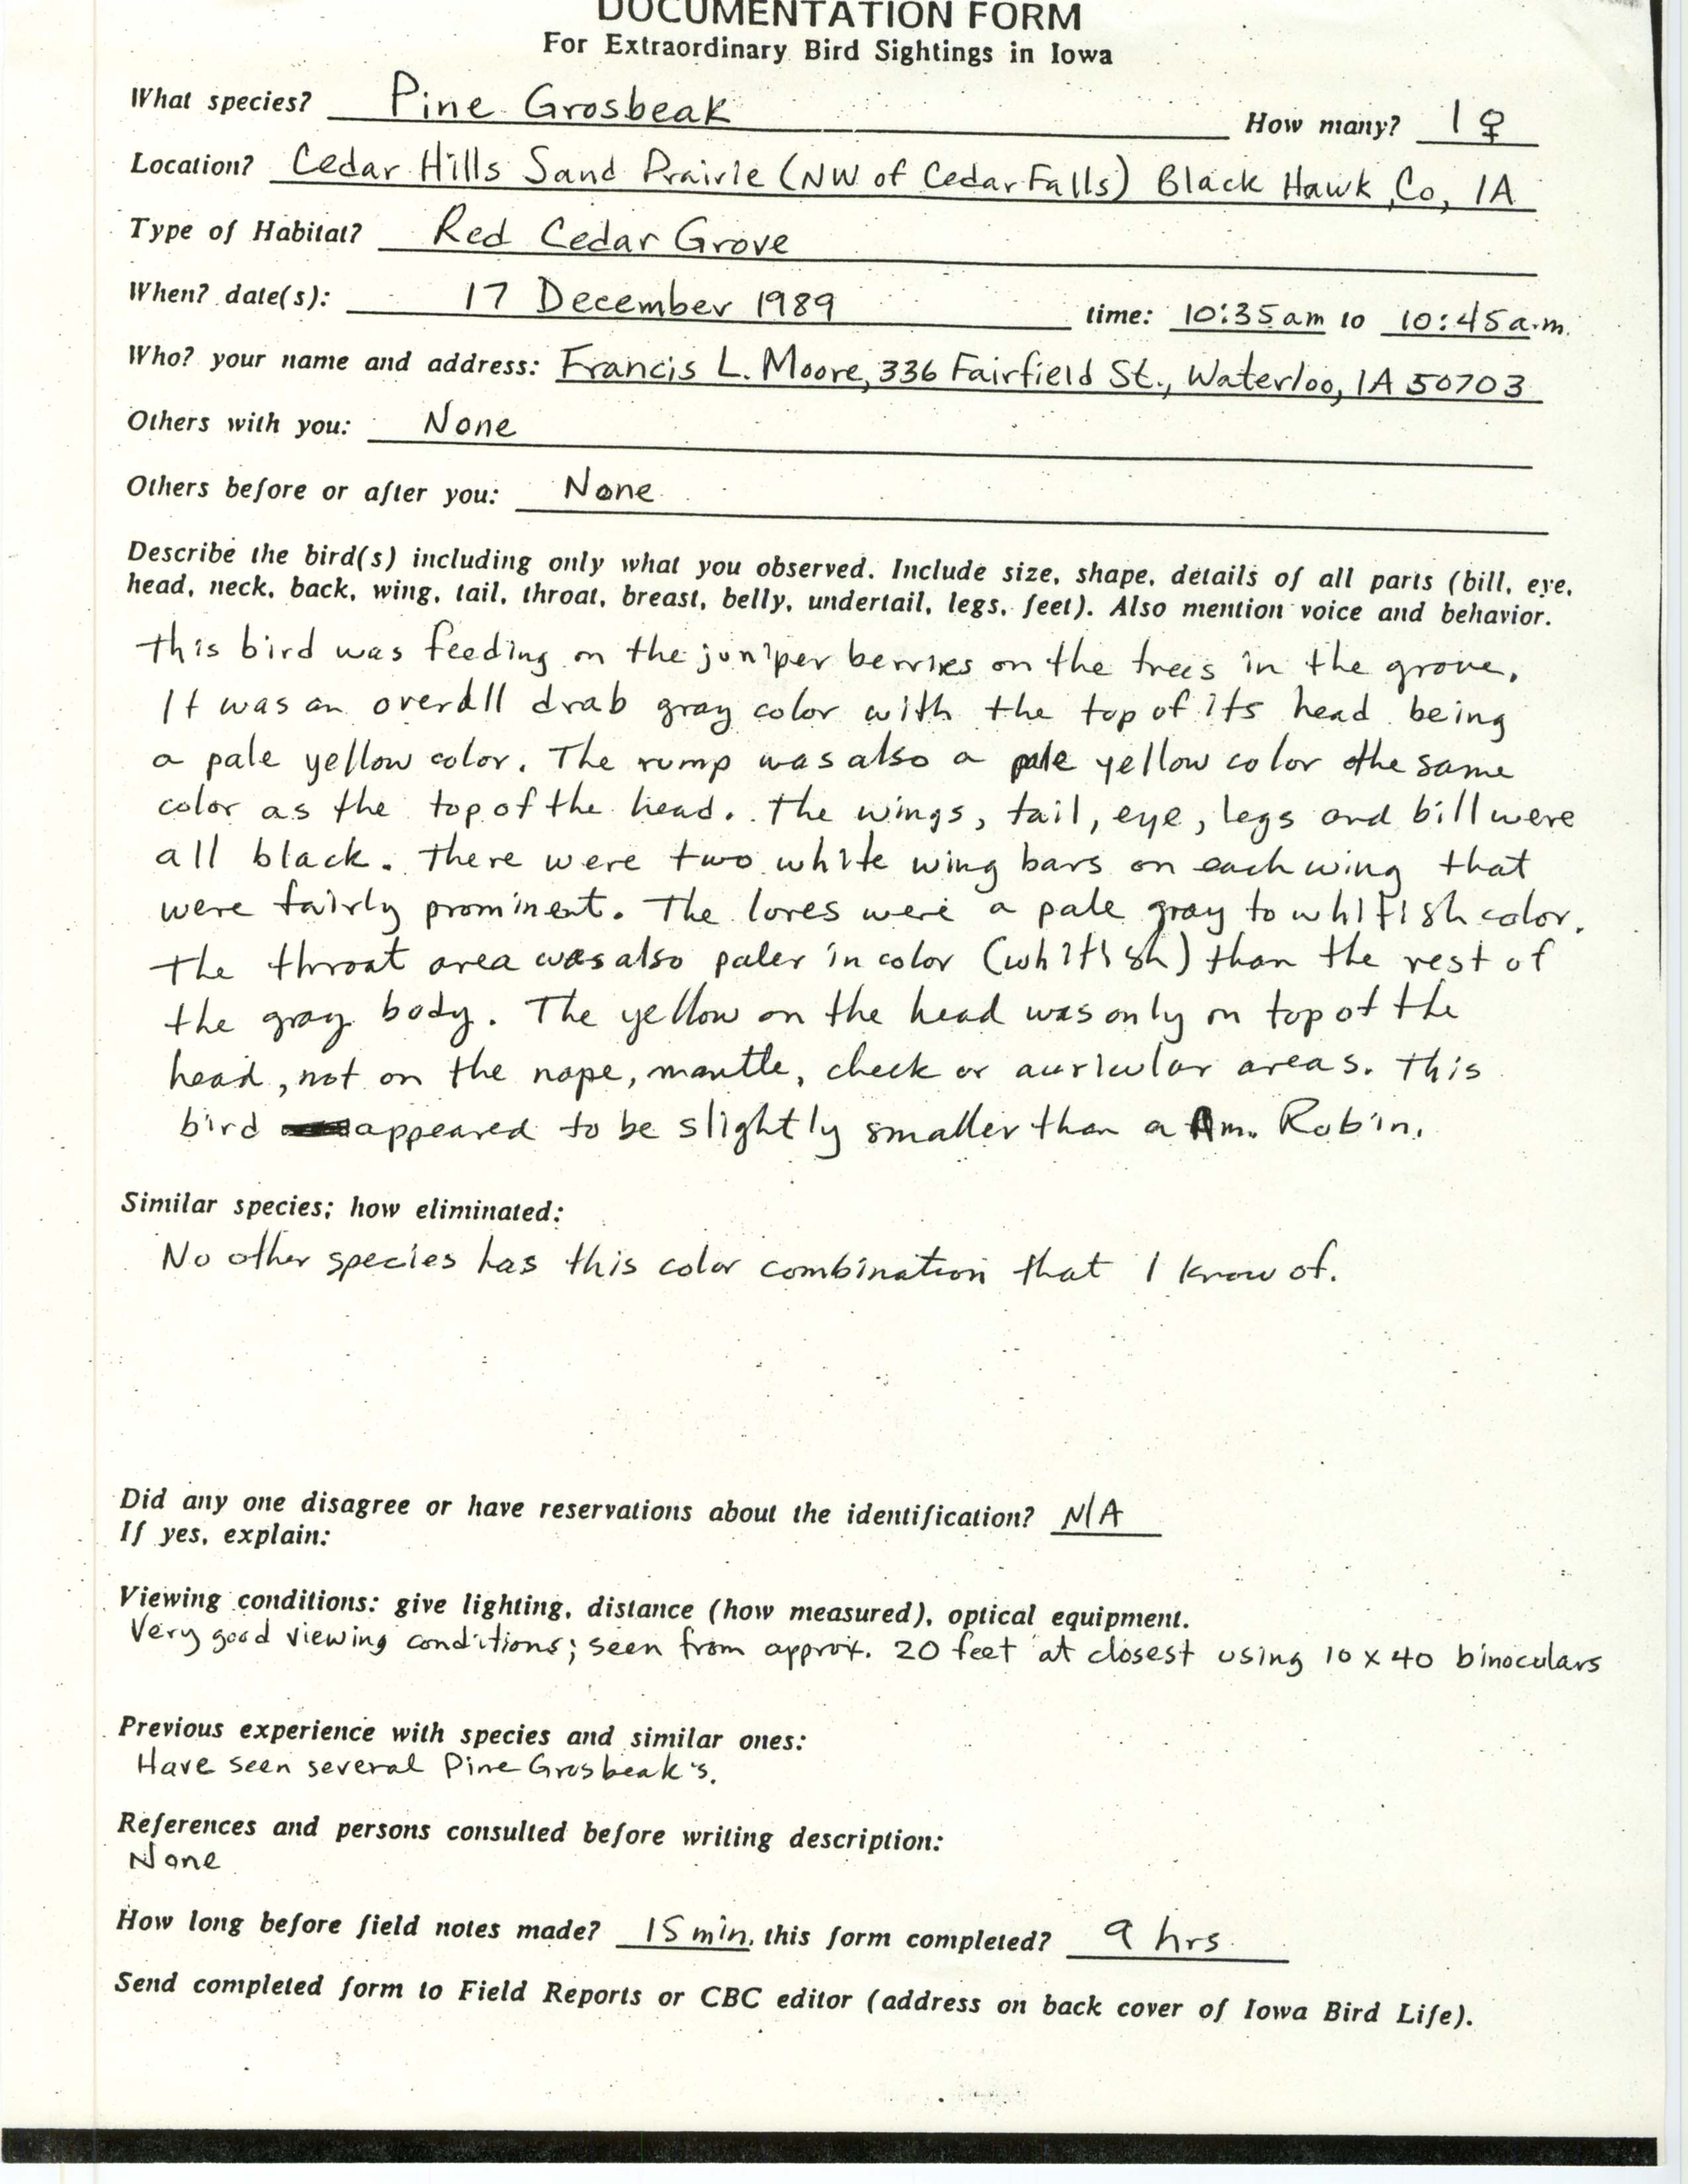 Rare bird documentation form for Pine Grosbeak at Cedar Hills Sand Prairie, 1989